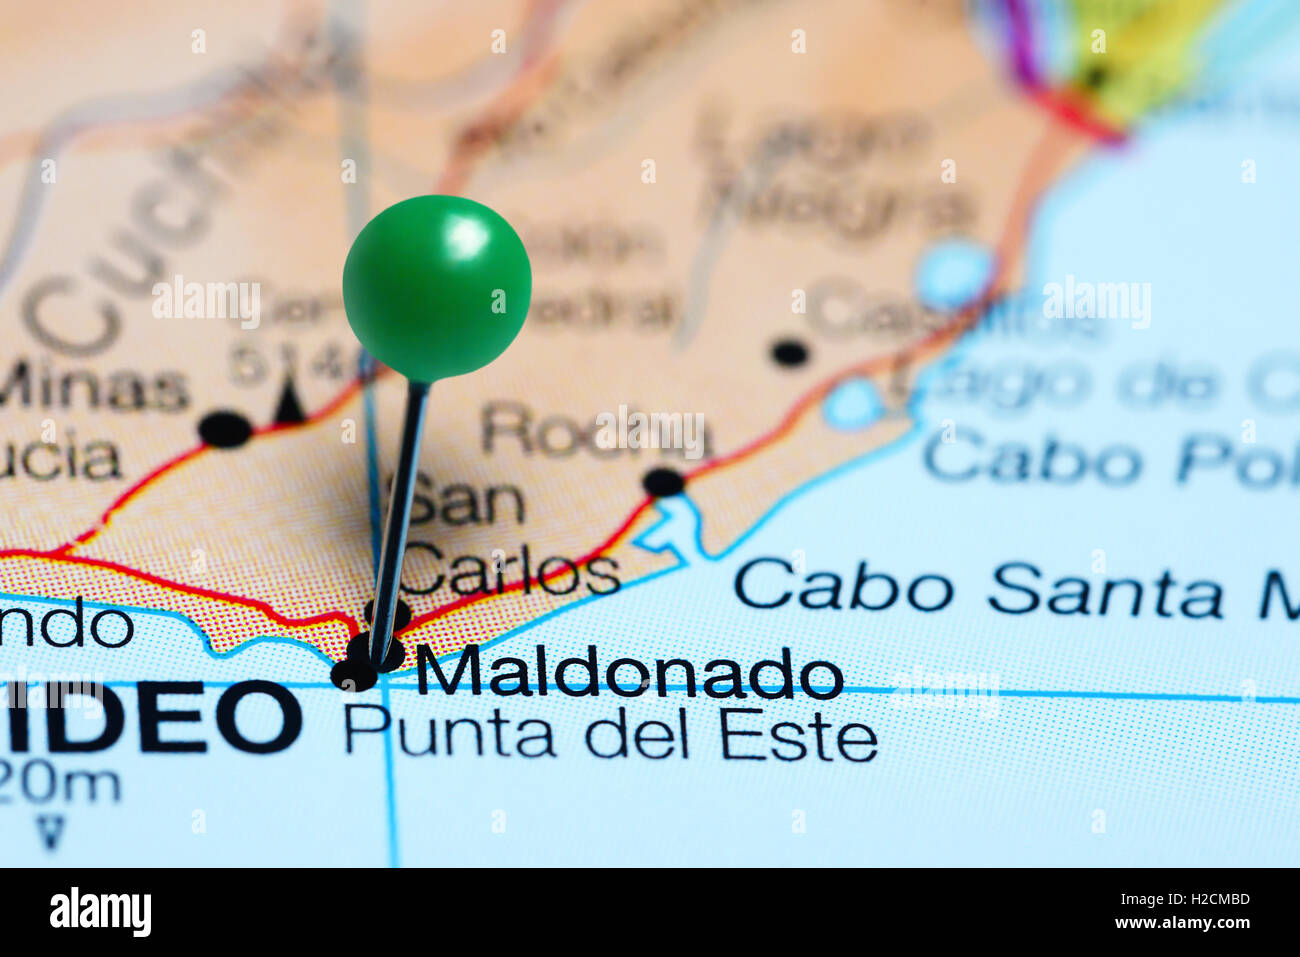 Maldonado pinned on a map of Uruguay Stock Photo